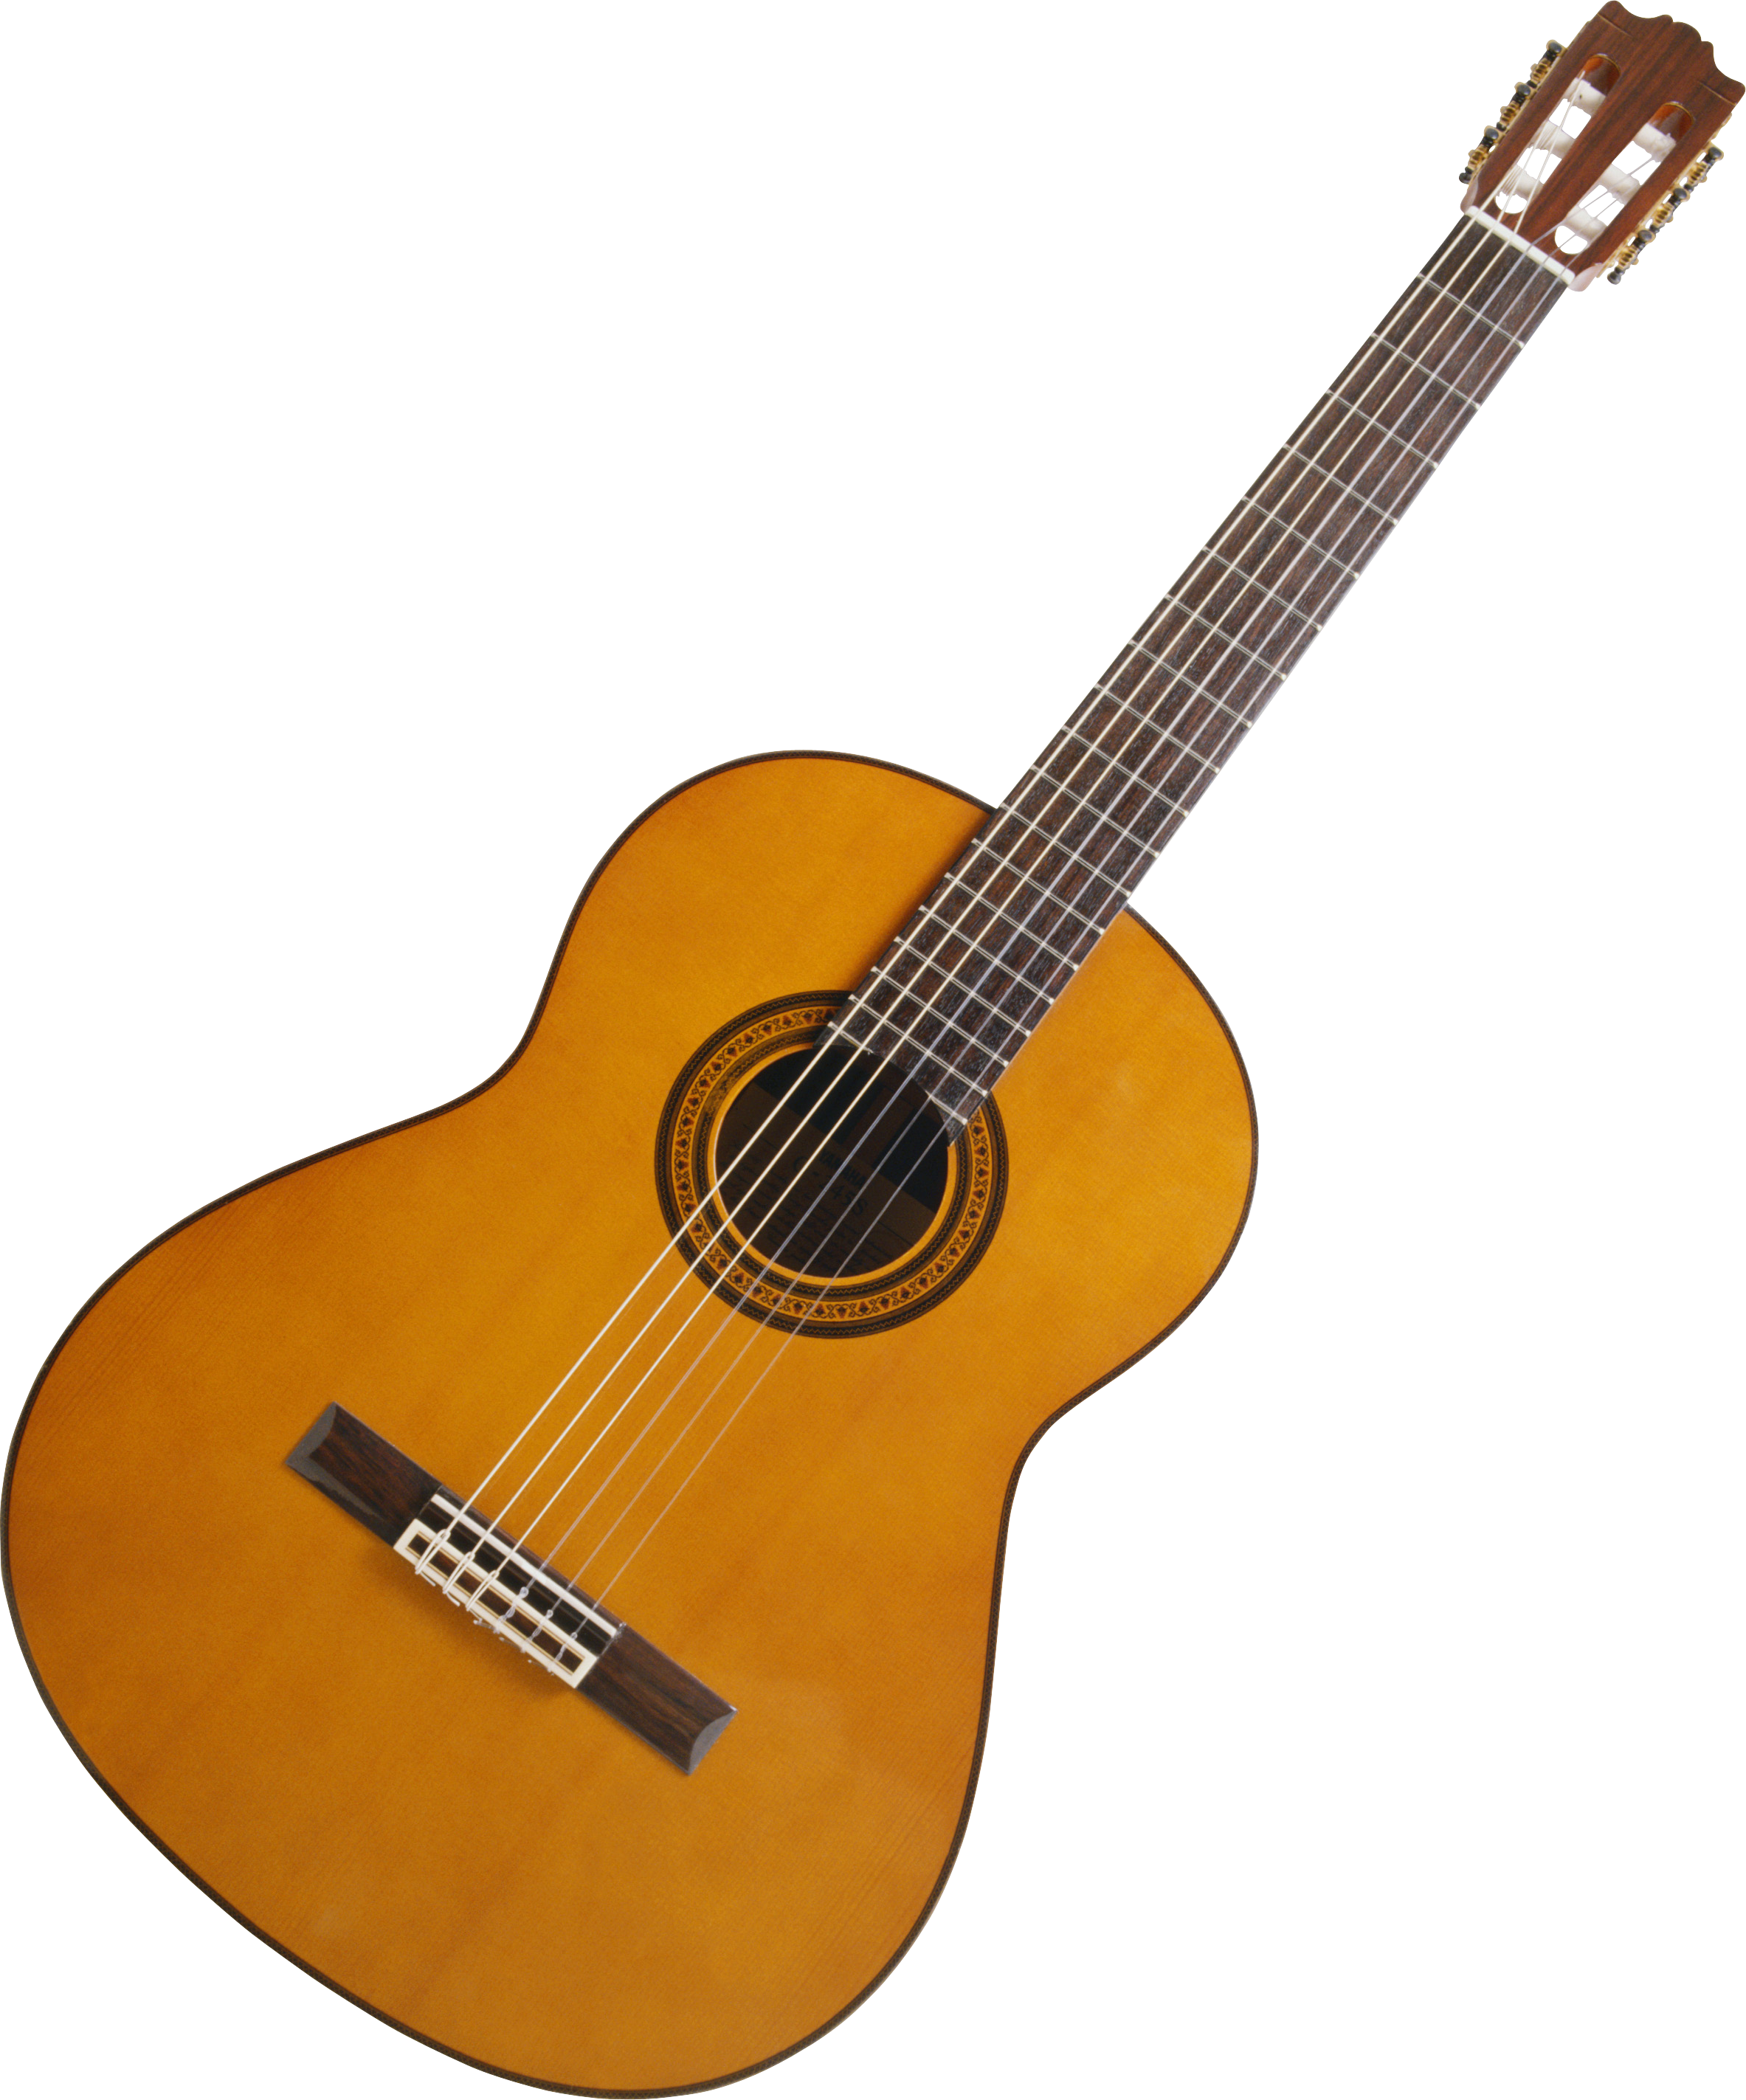 Download PNG image - Acoustic Guitar Musical Instrument Transparent PNG 